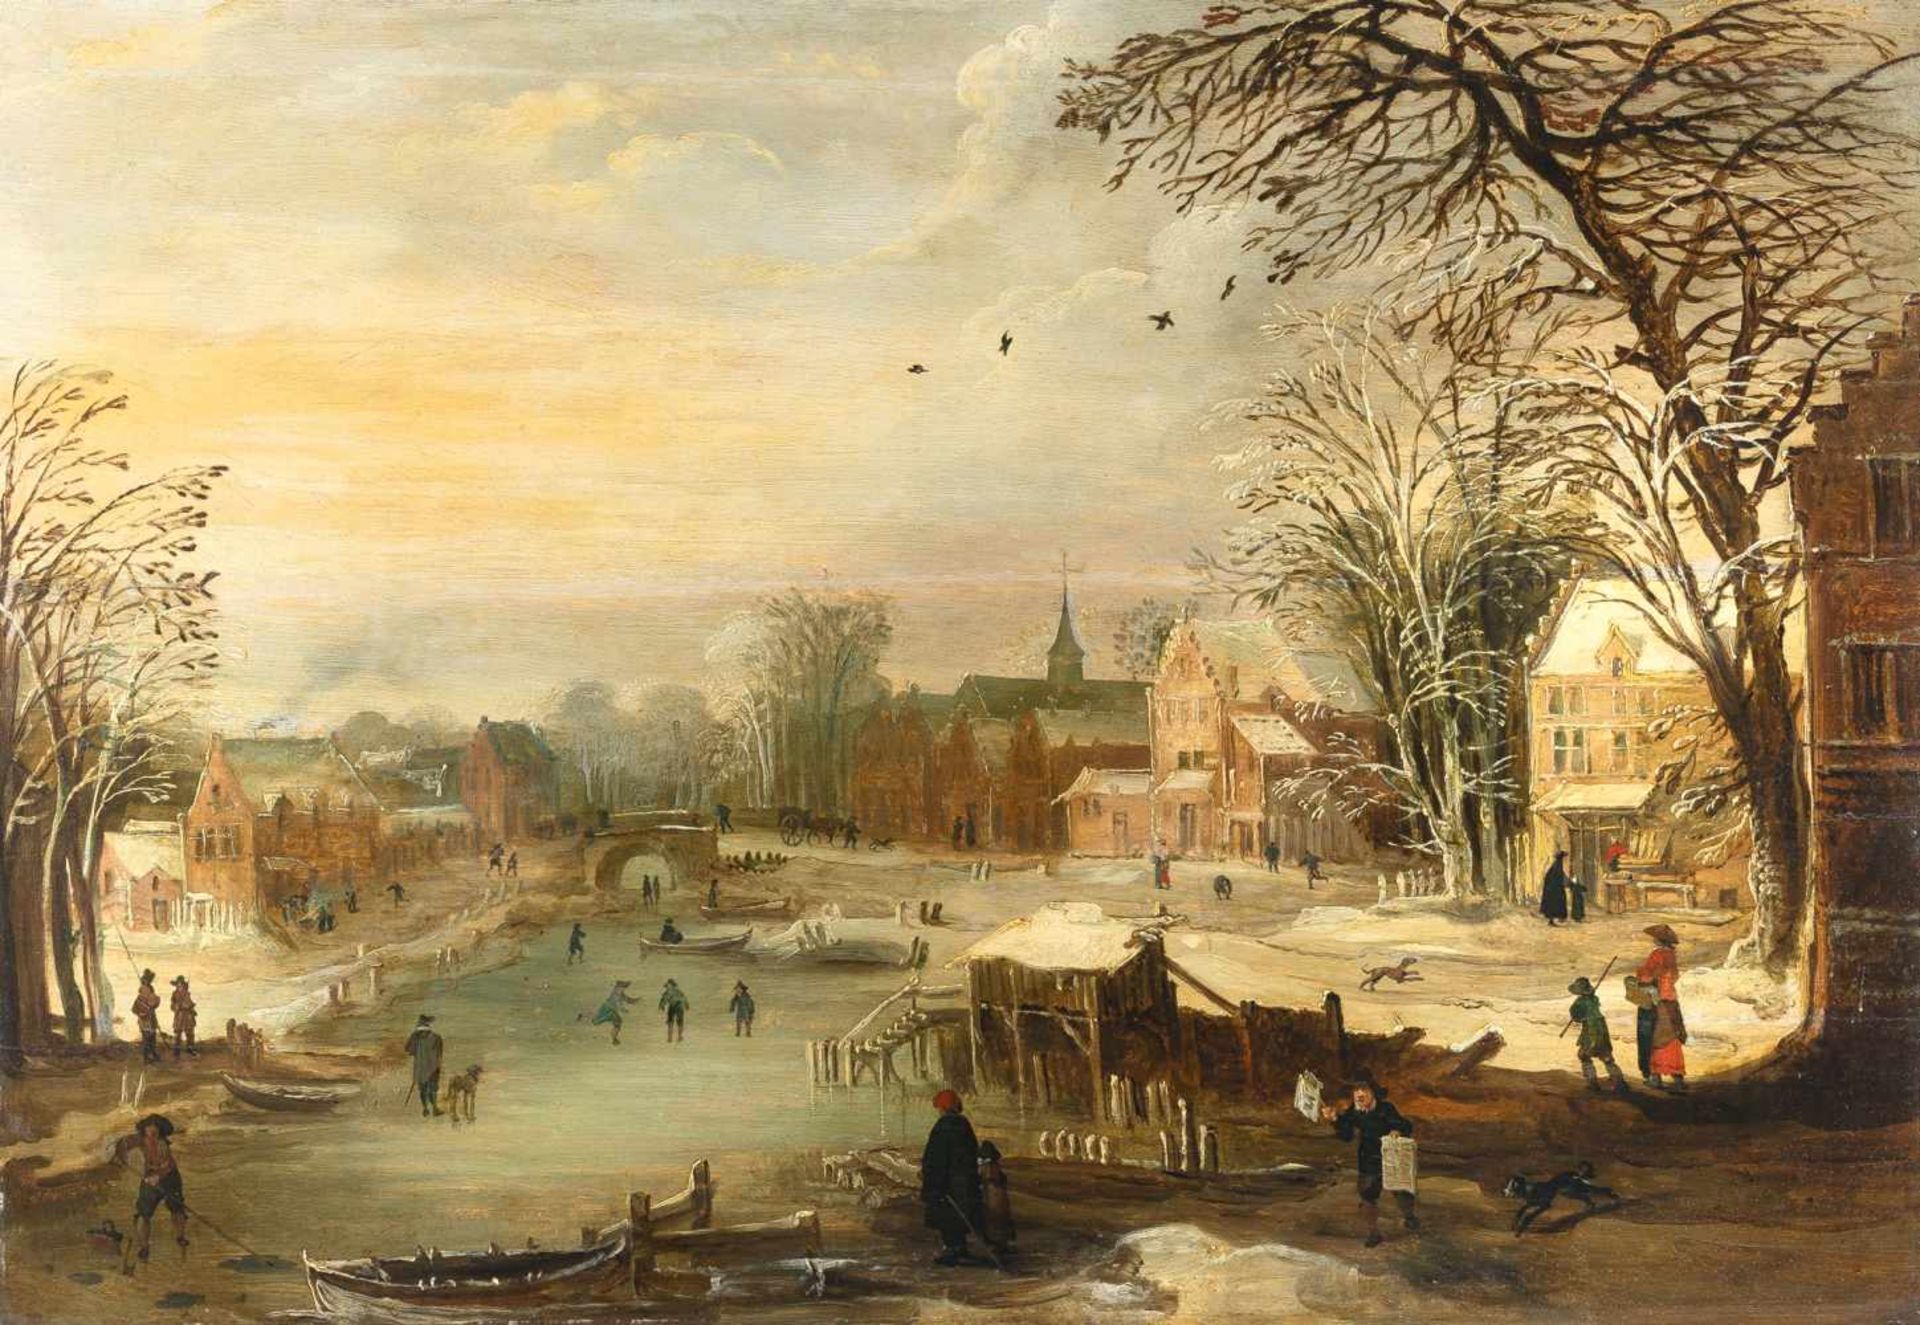 Josse de Momper D. J.1564 - Antwerp - 1635Winterliche Dorflandschaft am vereisten FlussÖl auf